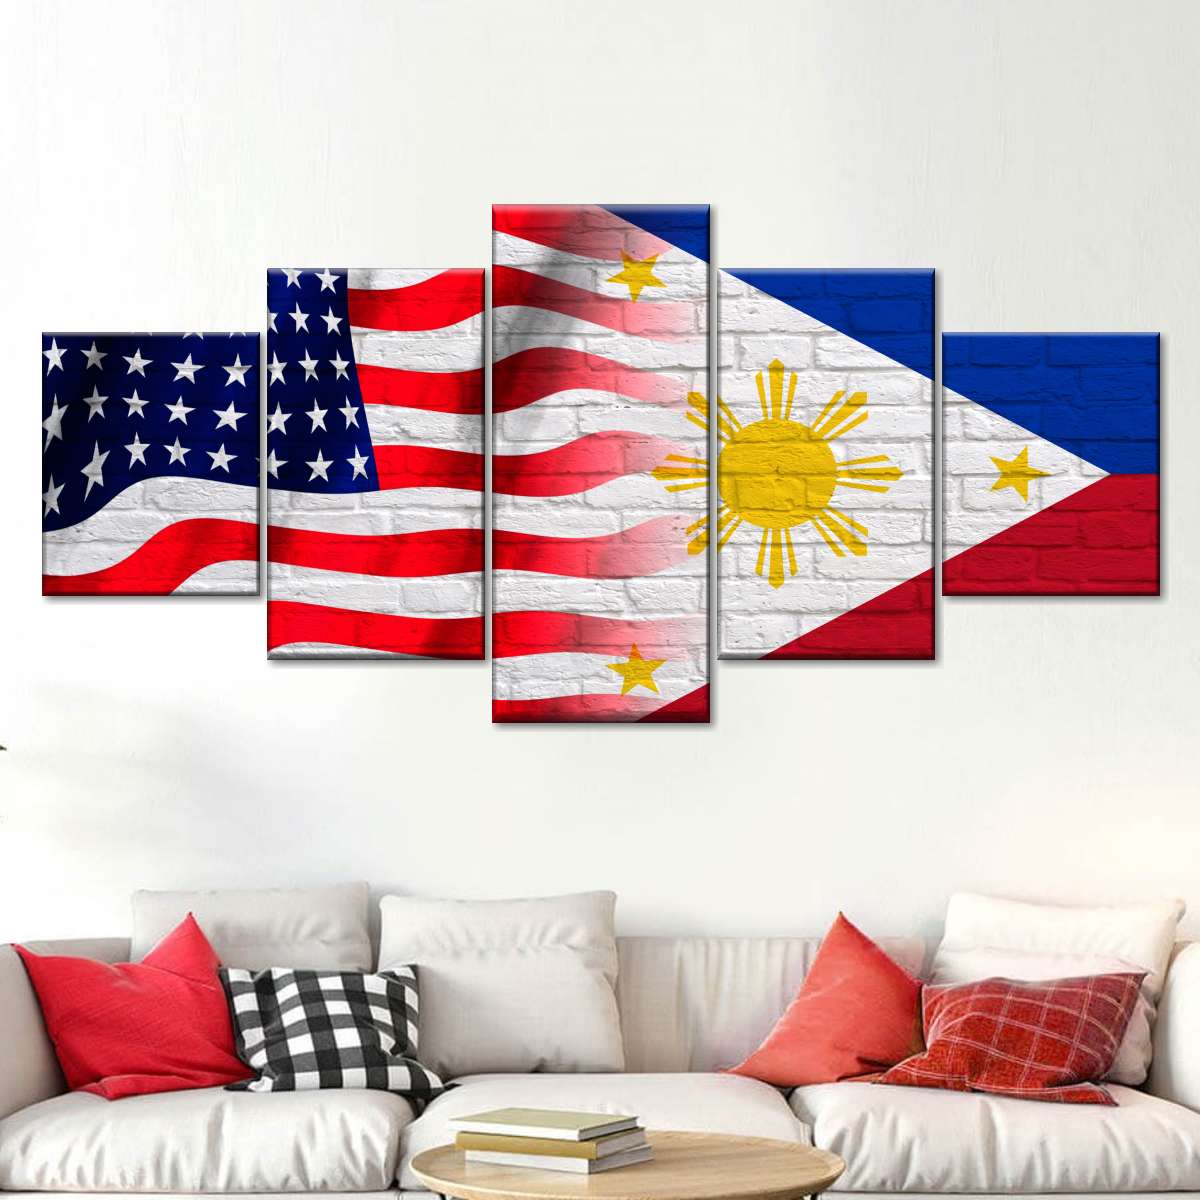 Philippines And Usa Flag Multi Panel Canvas Wall Art Elephantstock